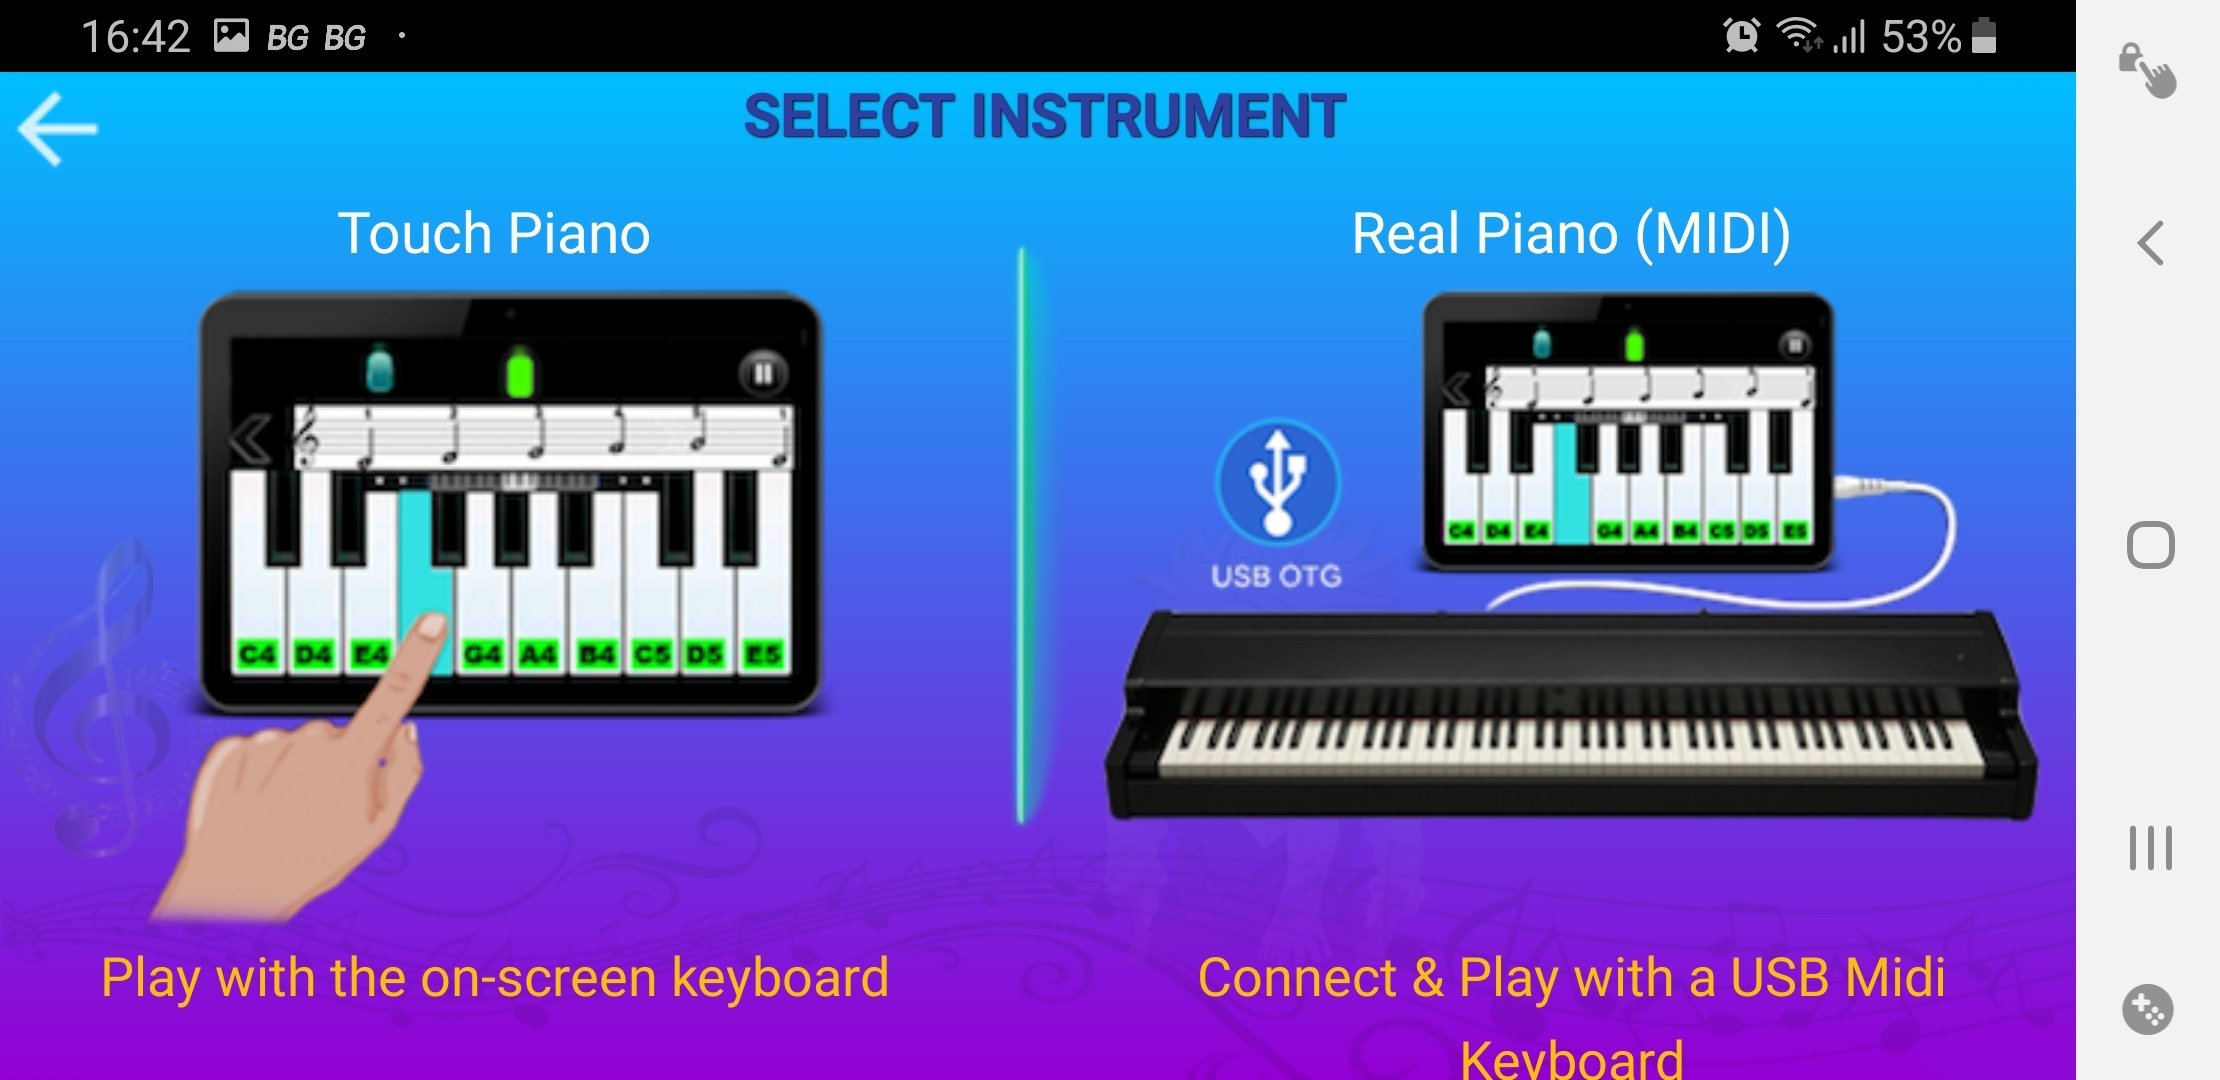 Professor de piano real - Download do APK para Android